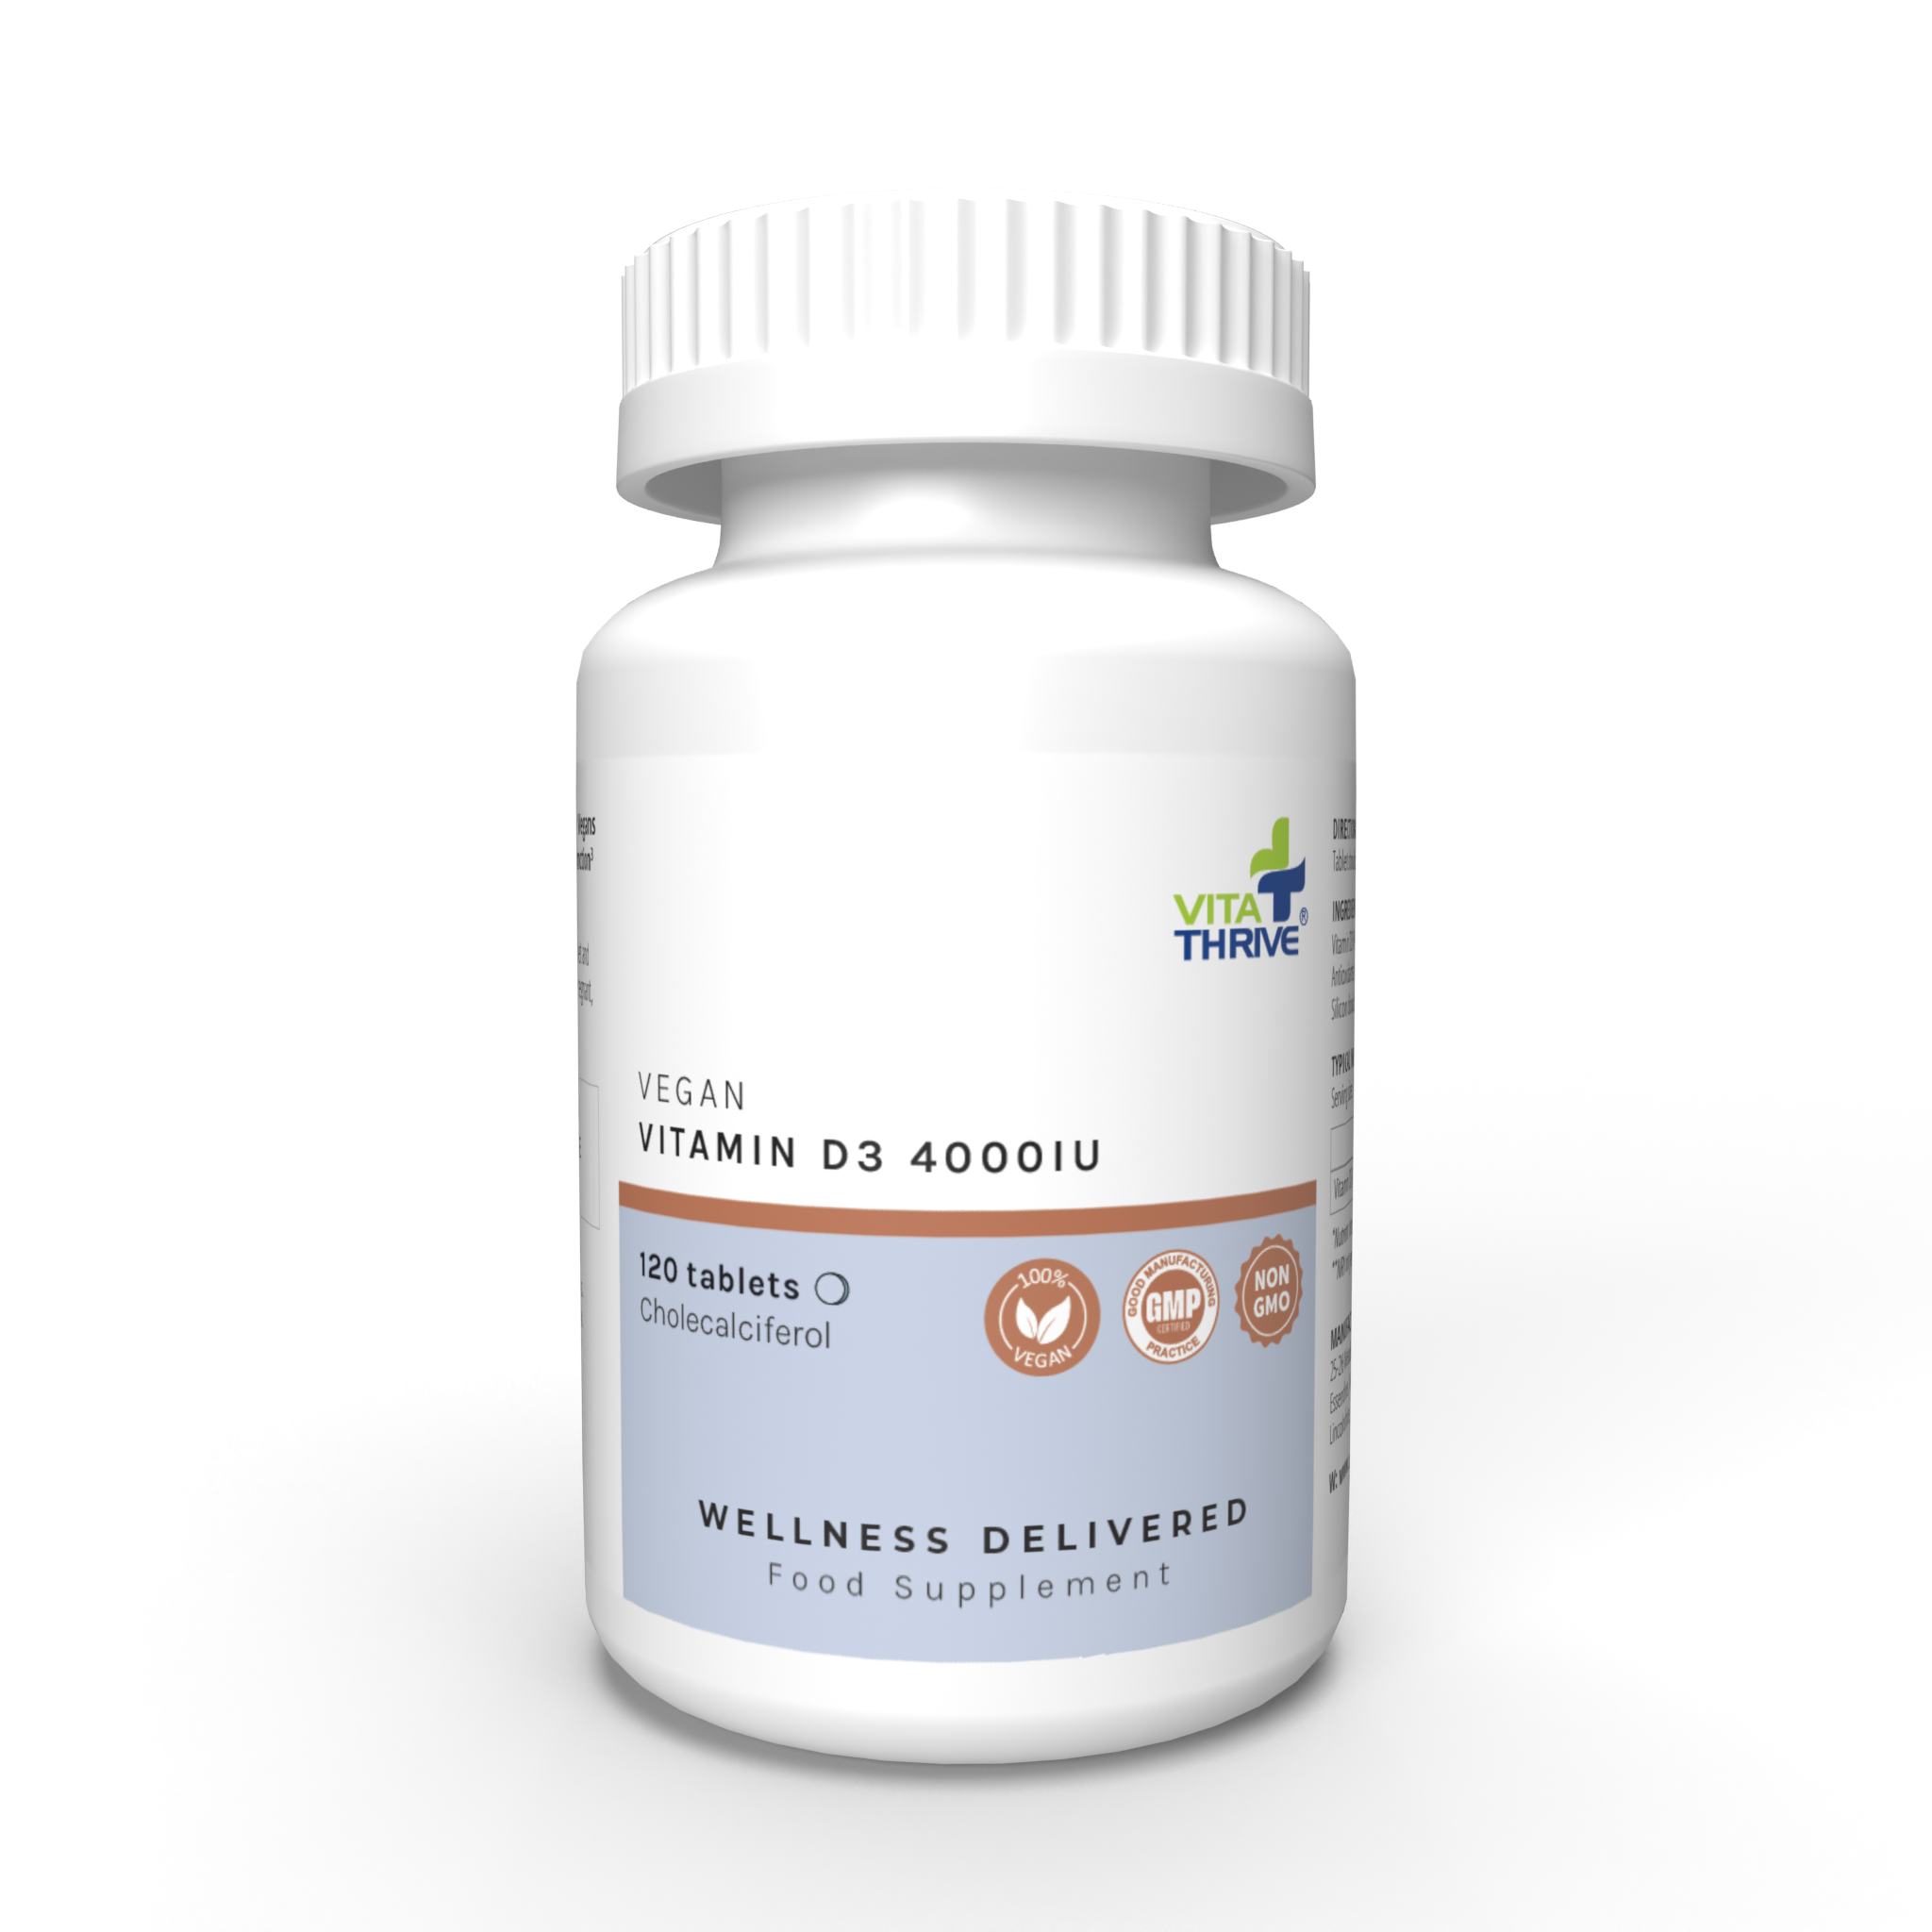 VitaThrive® Vegan Vitamin D3 400iu– 120 Tablets